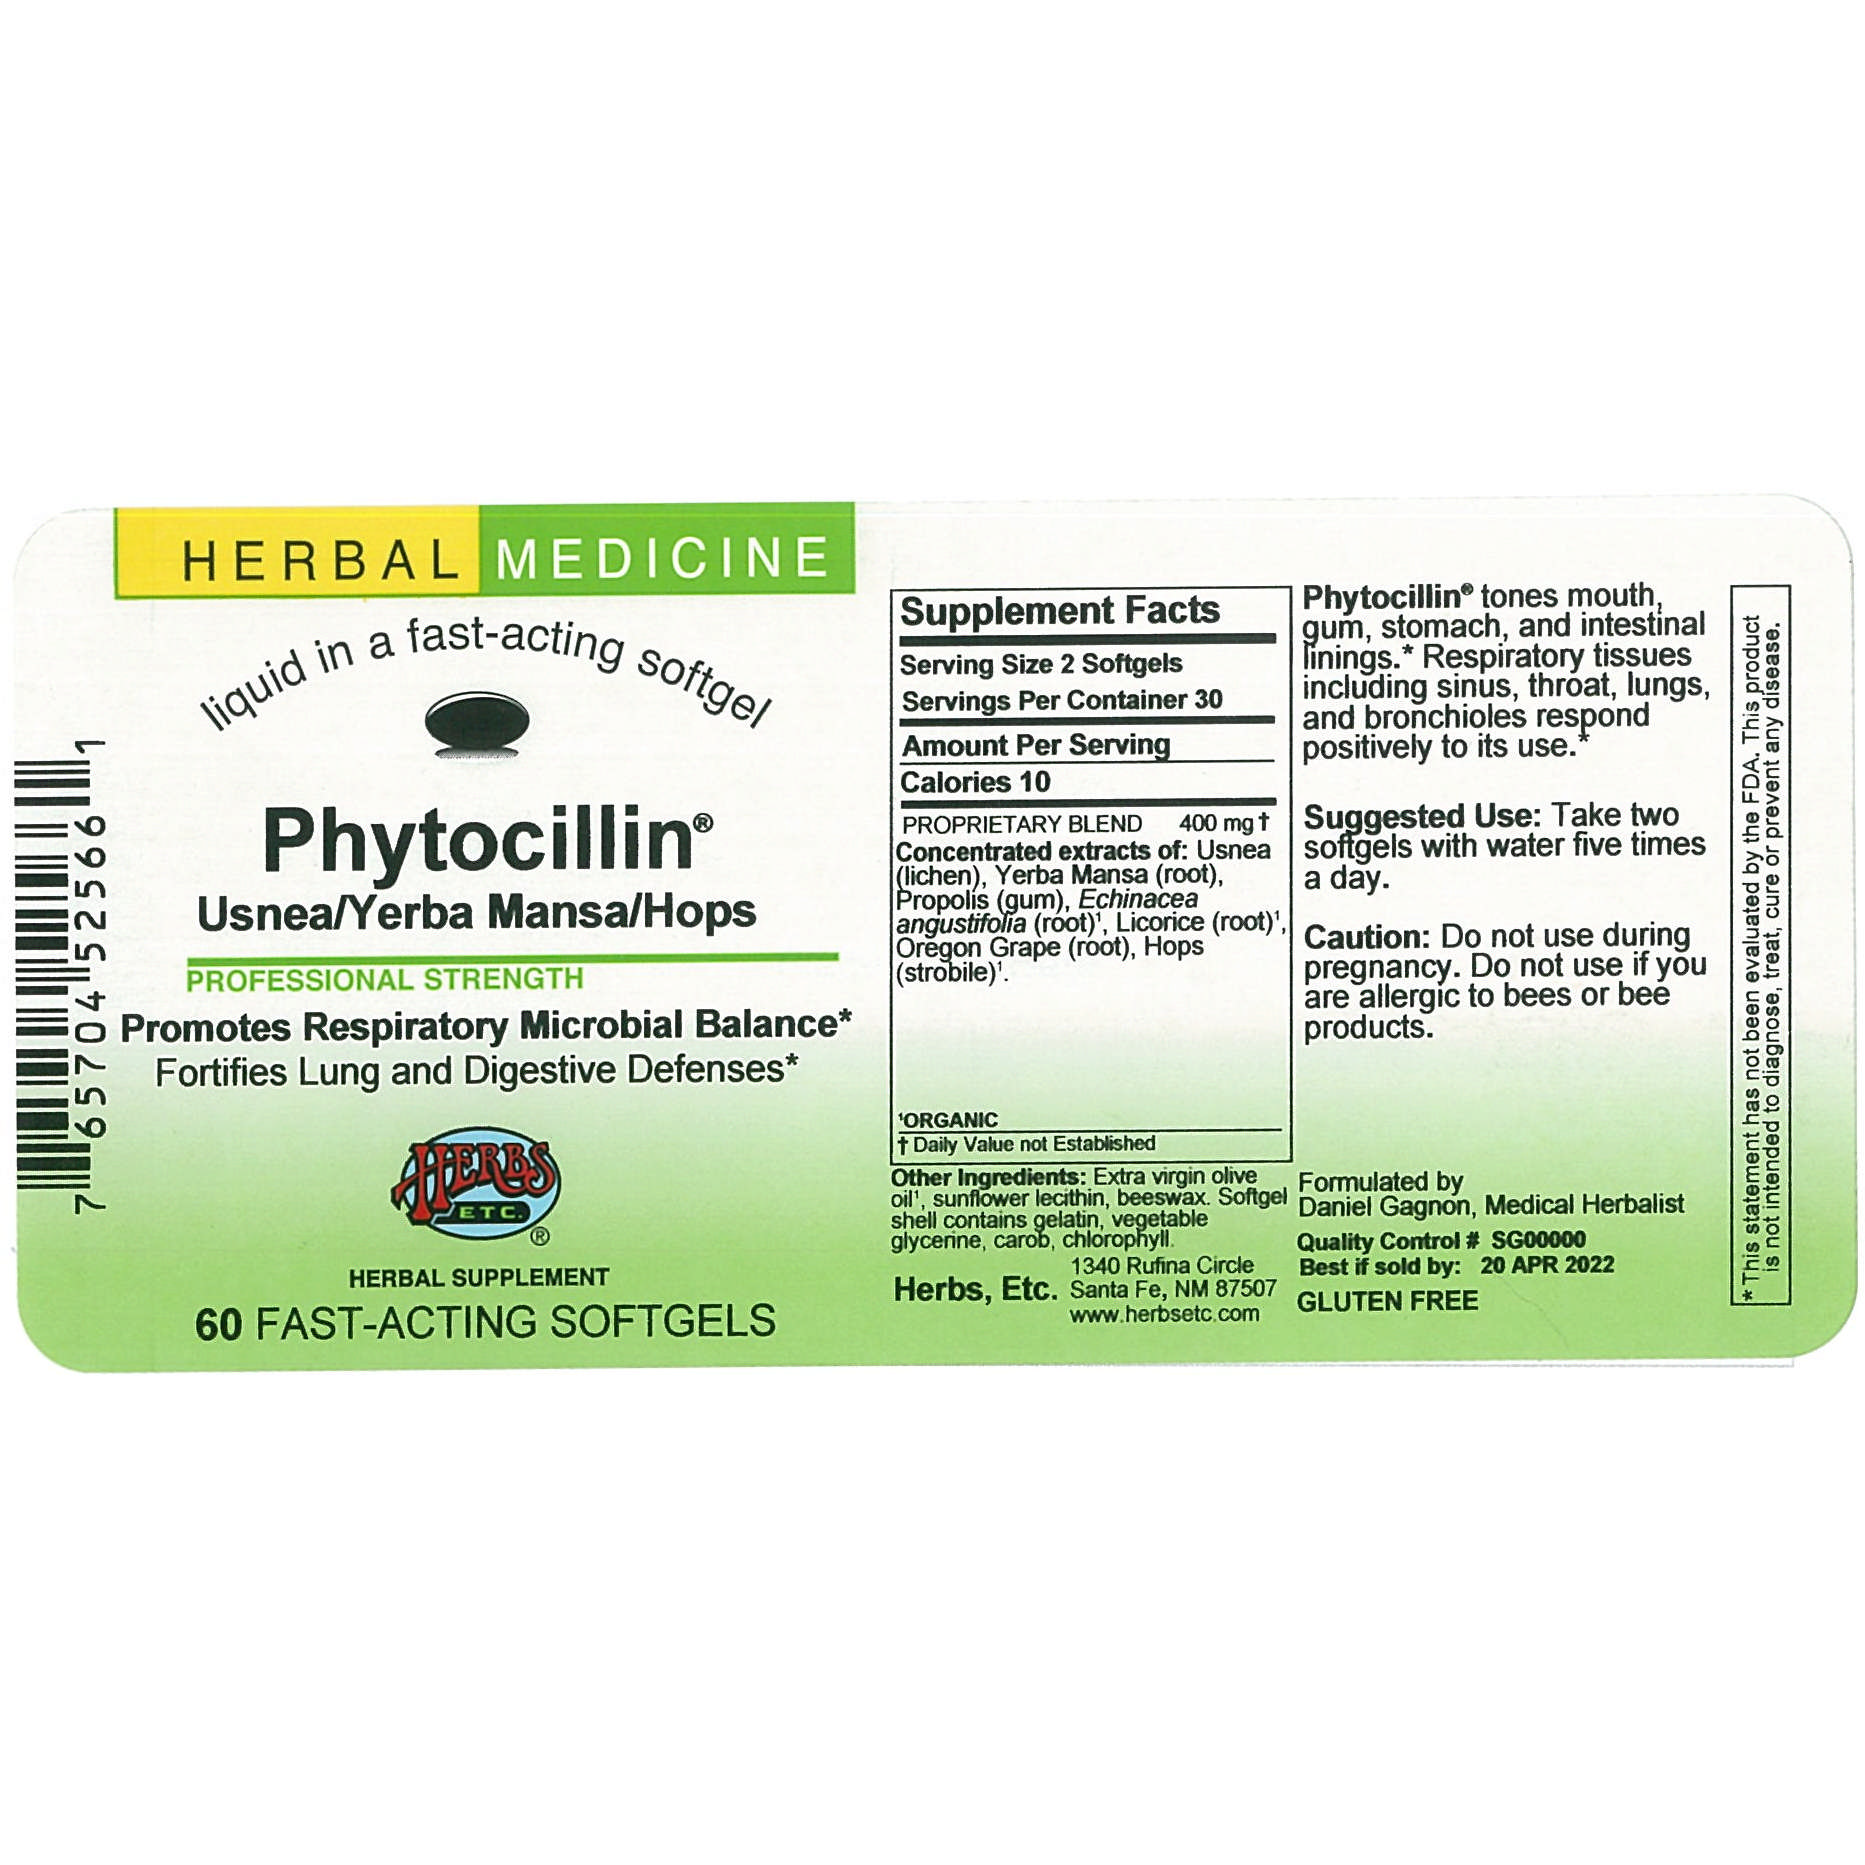 Herbs Etc - Phytocillin